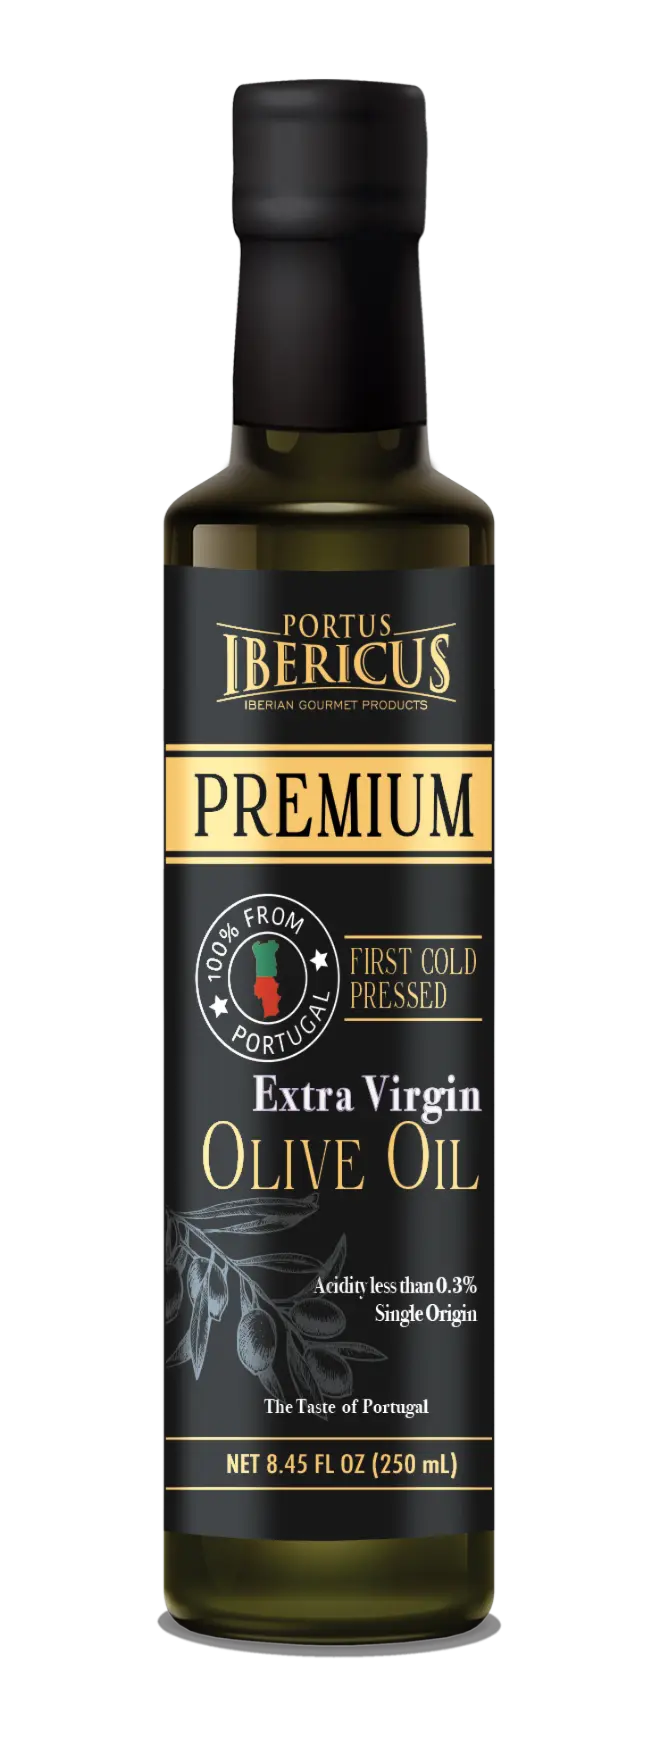 Extra Virgin Olive Oil Premium 8.45 FL OZ - 250ml